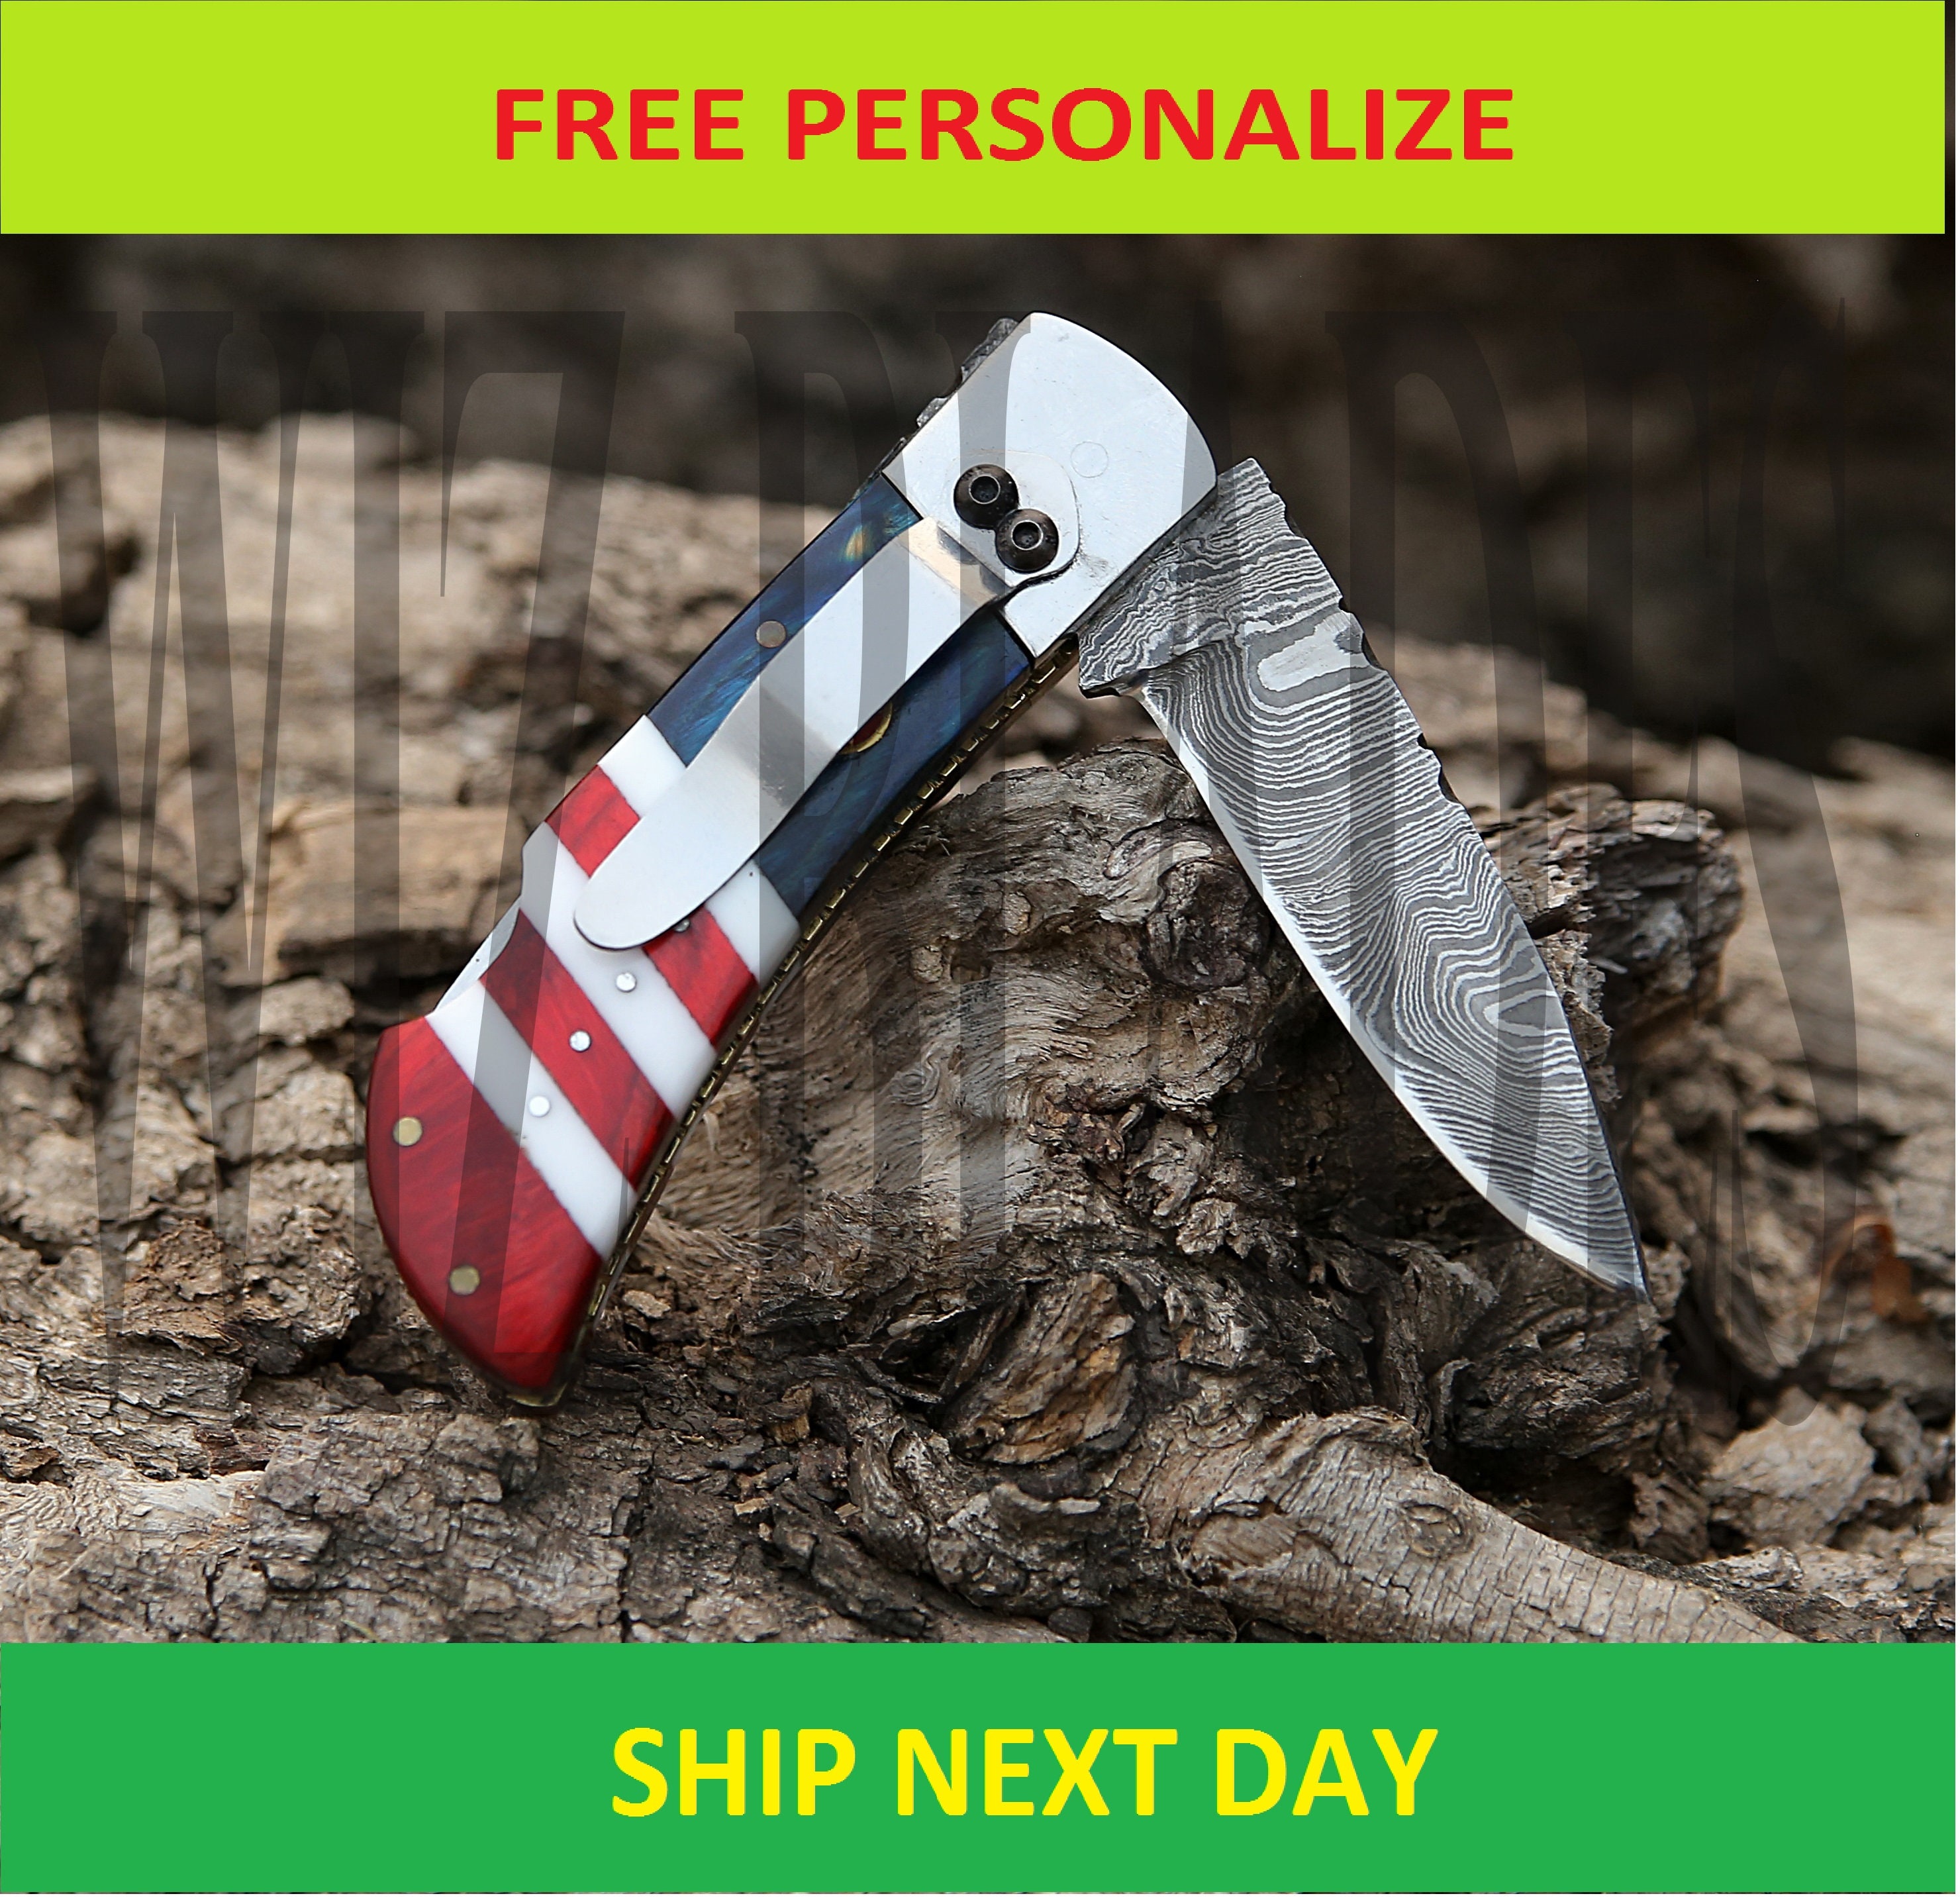 3-in-1 Handheld Knife Sharpener With Adjustable Angle Dial 14-24 Degrees  for Kitchen Knives, Hunting Knives, Pocket Knives, & More 